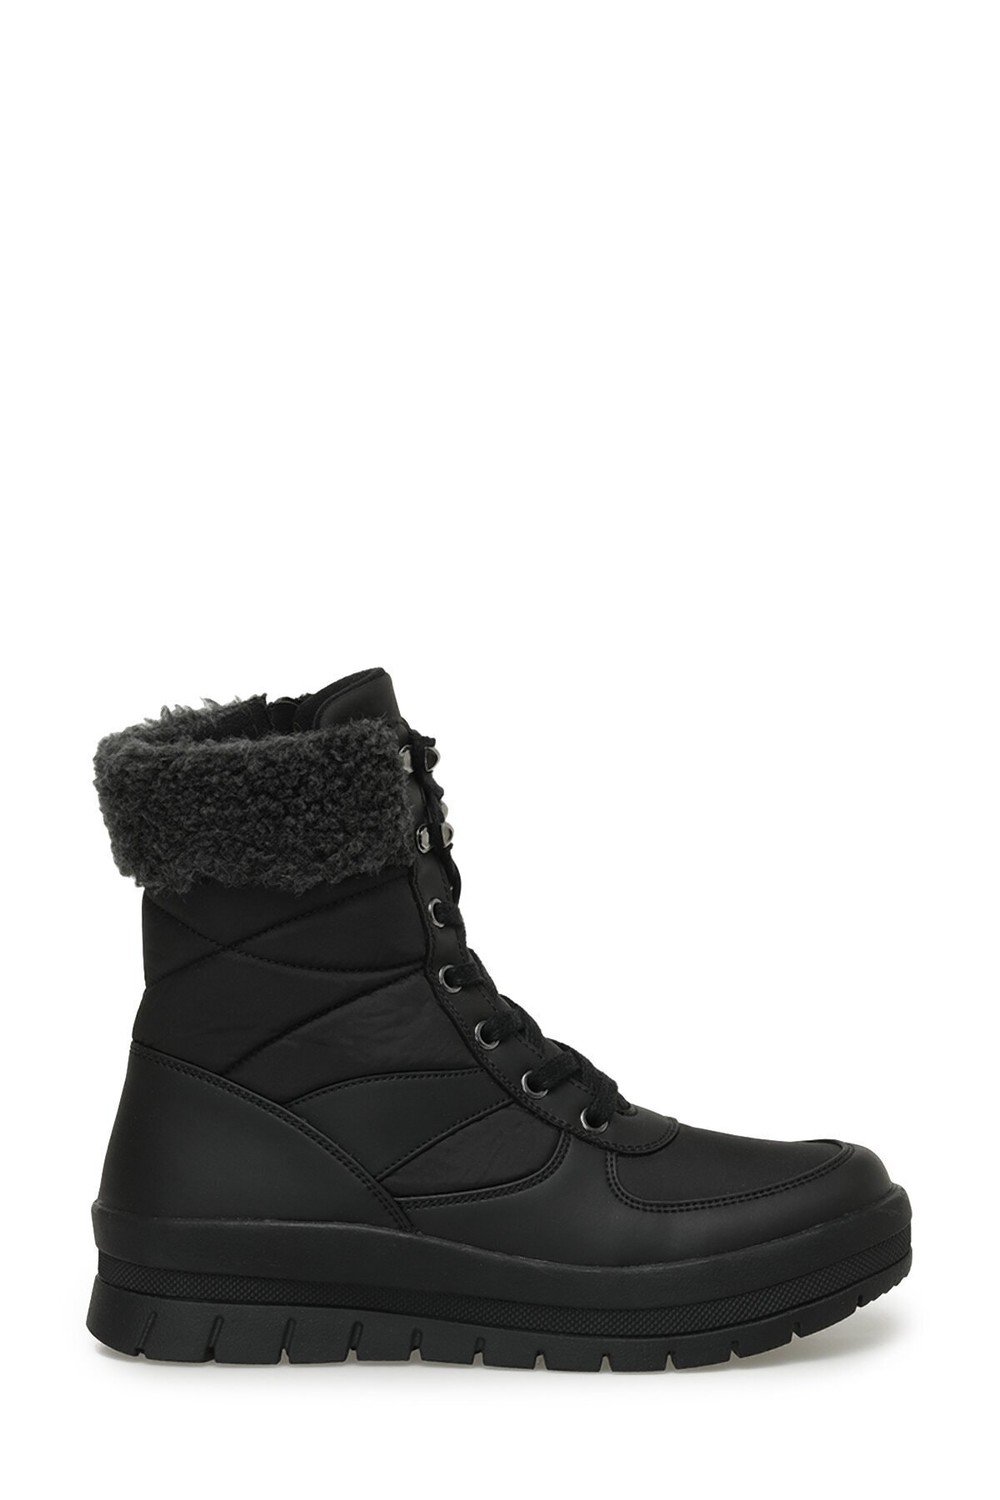 Polaris 318626.Z 3PR Women's Black Snow Boots